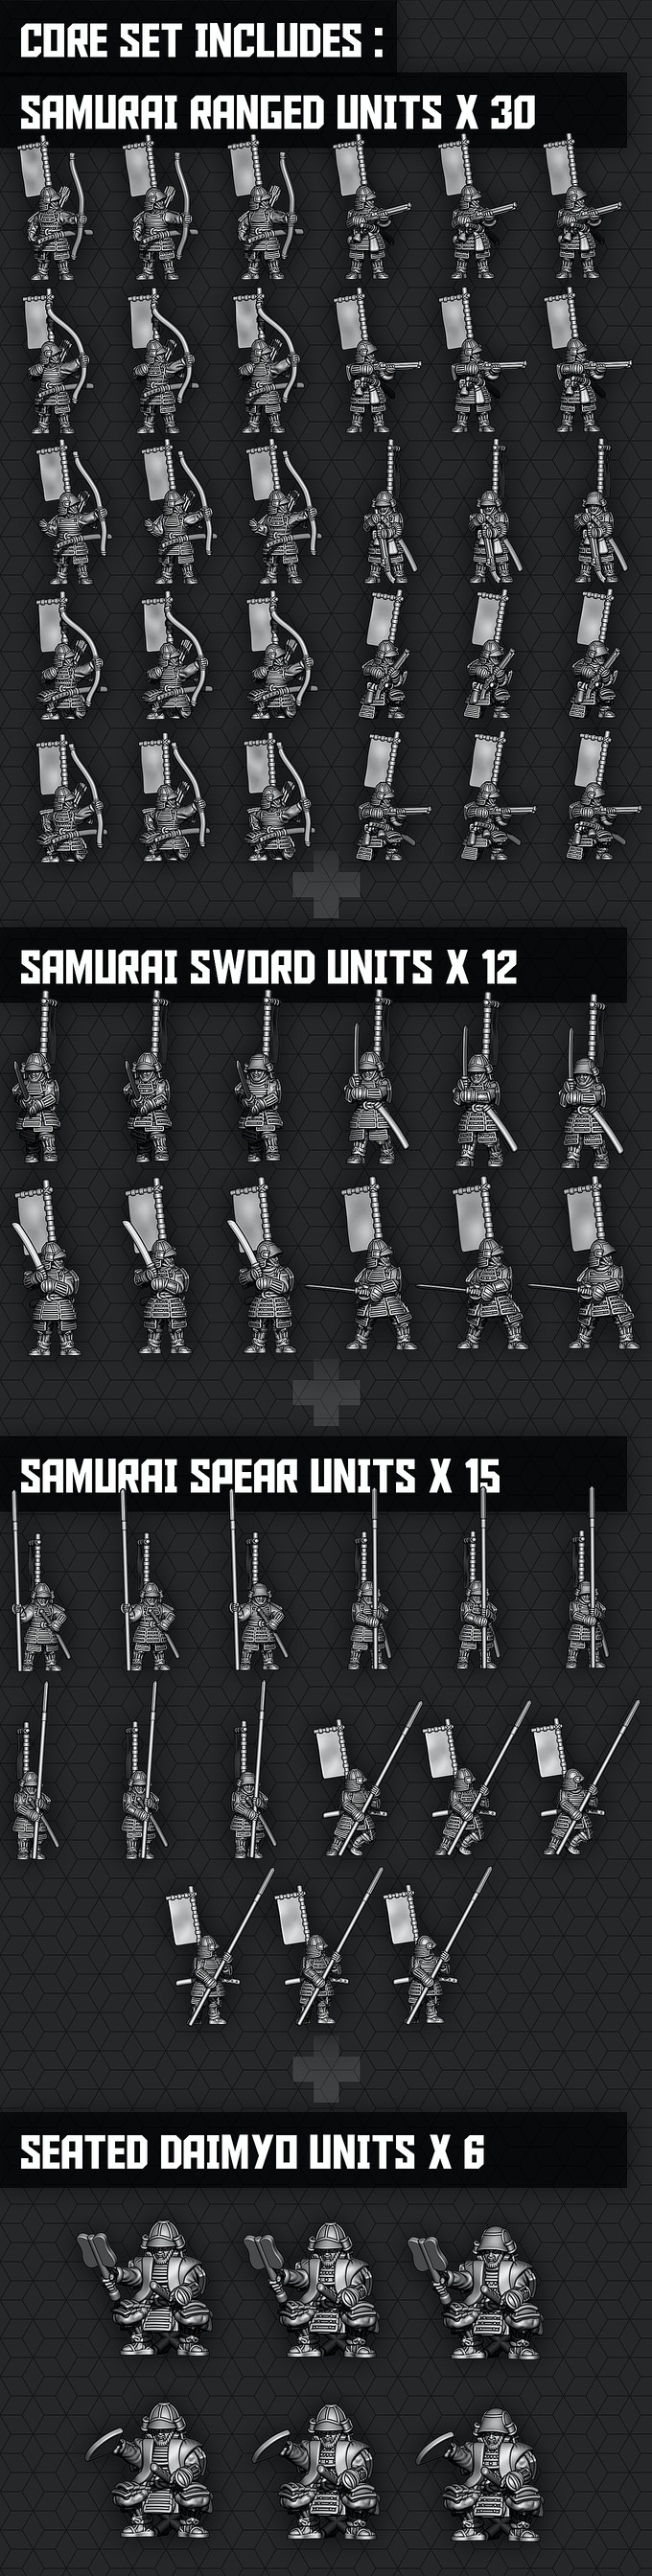 Samurai Warfare Core Set #2 - Smol Miniatures